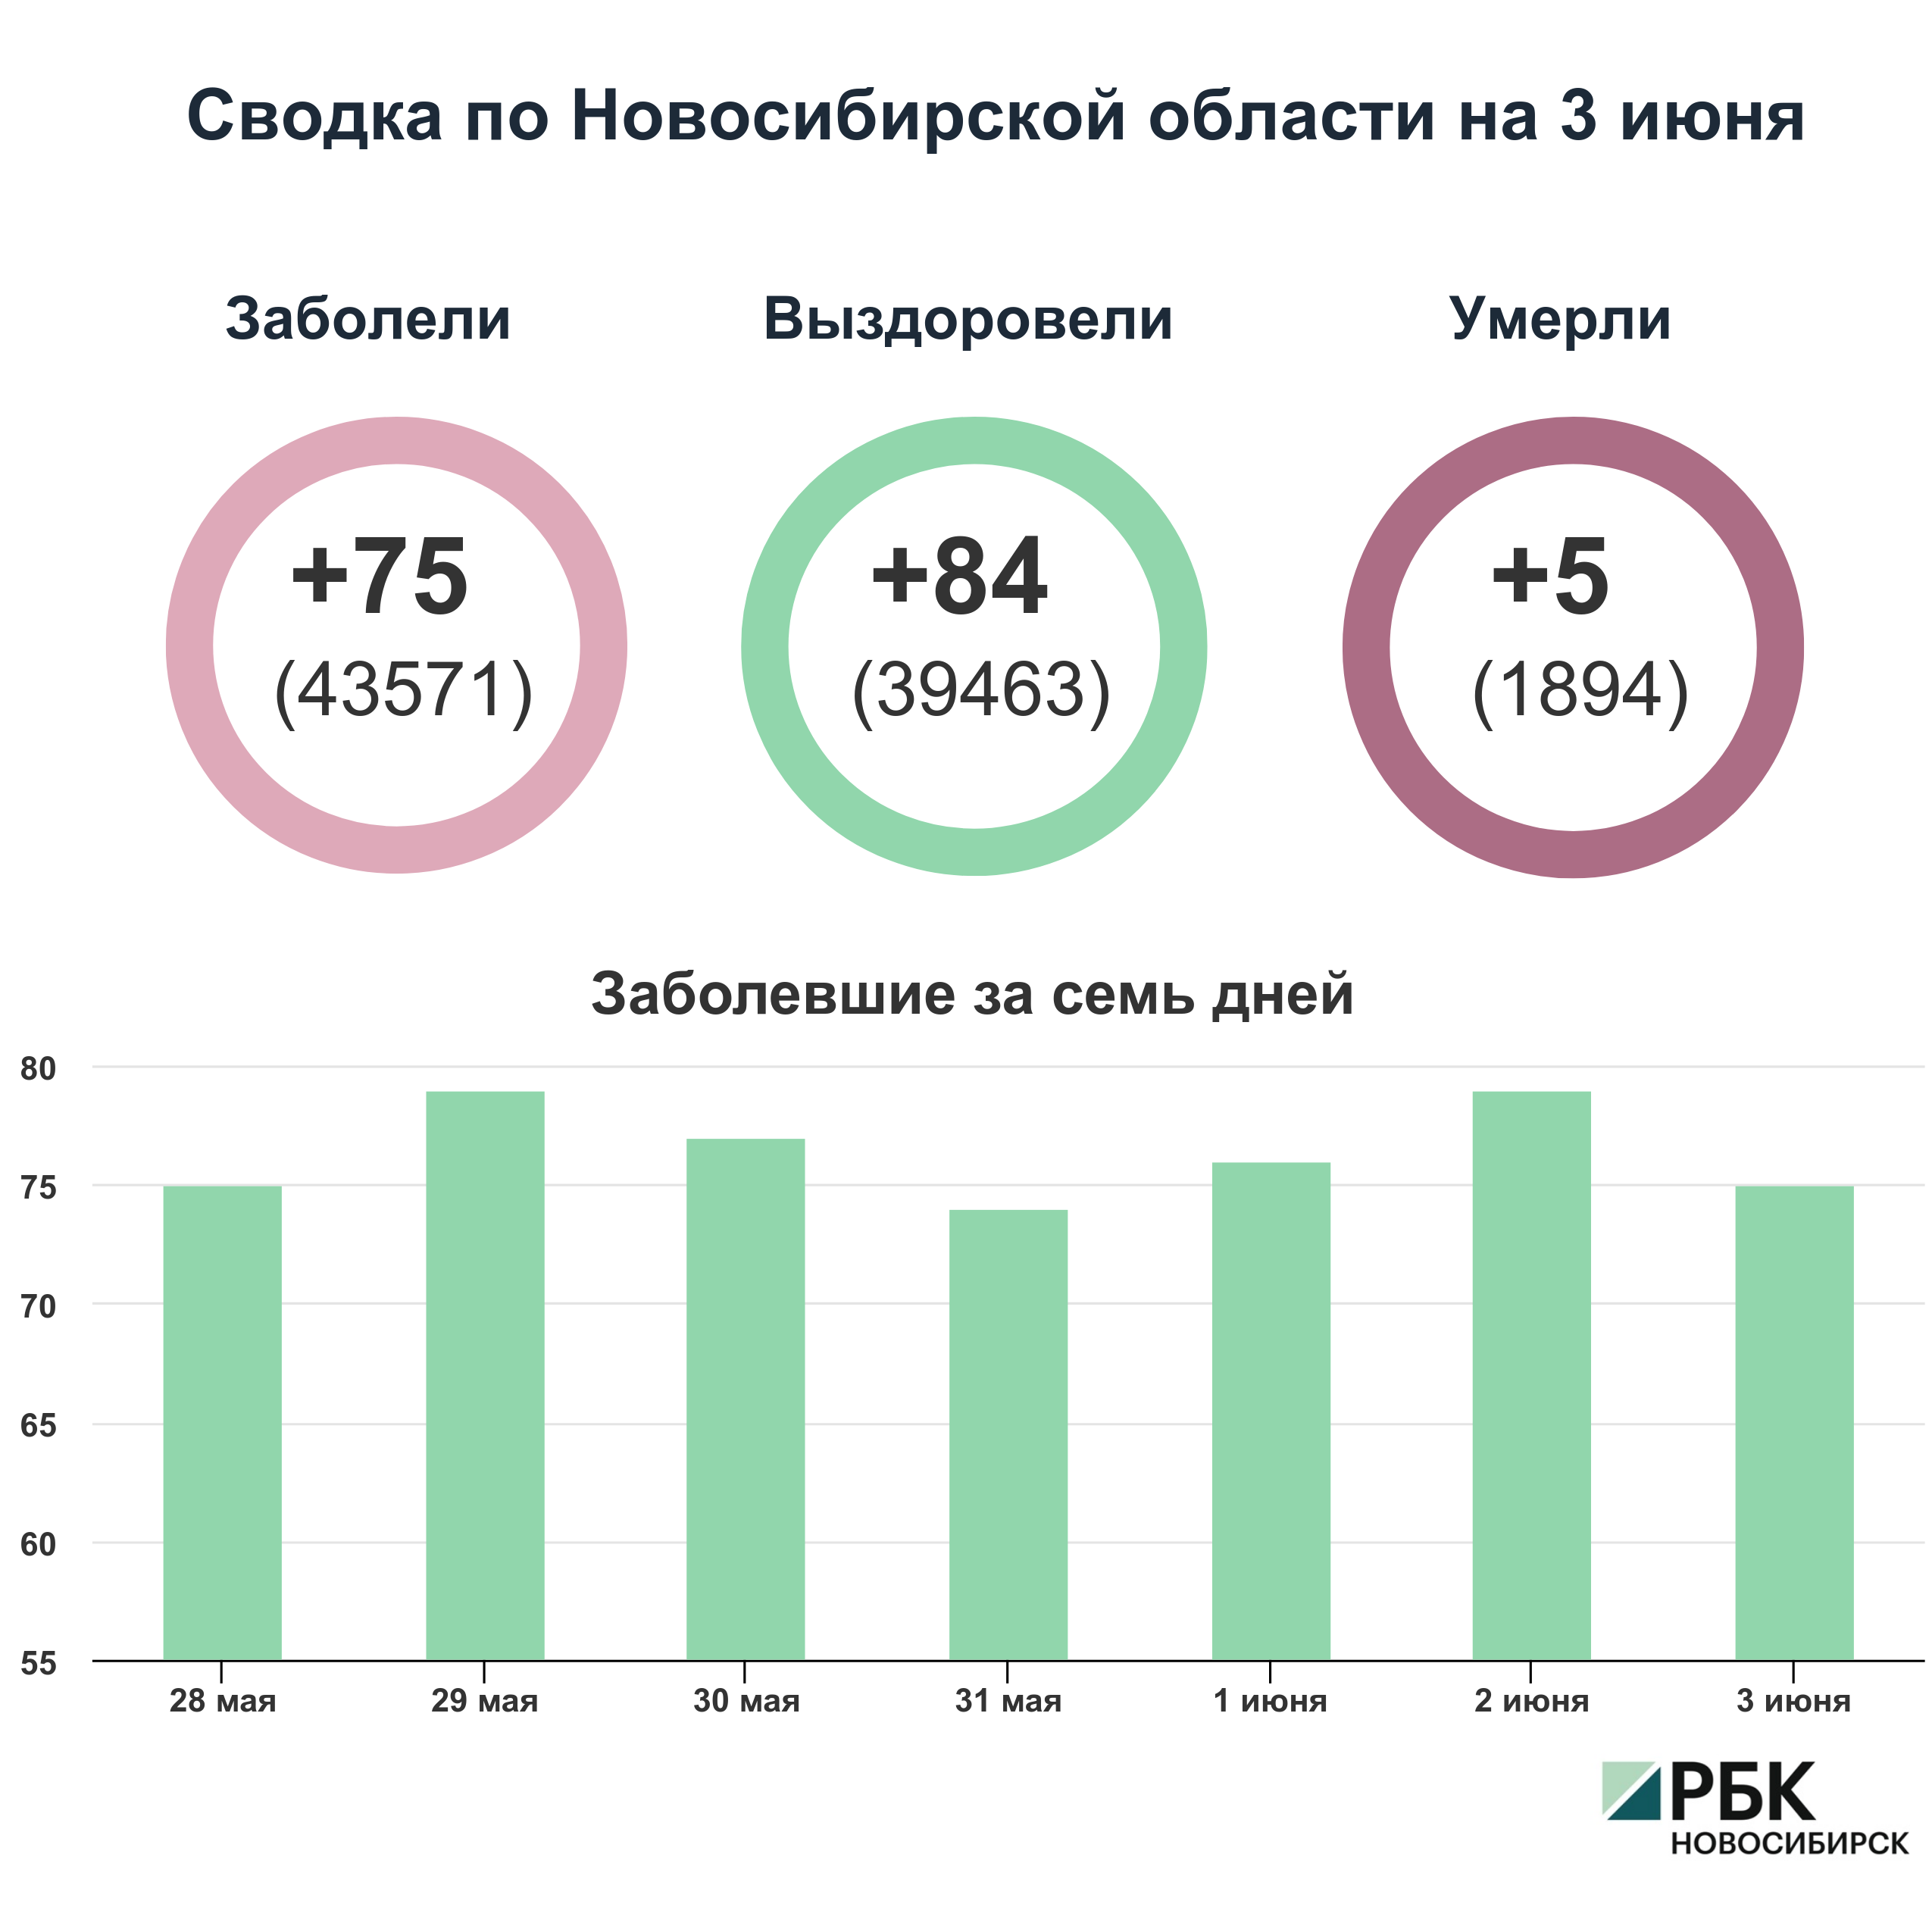 Коронавирус в Новосибирске: сводка на 3 июня